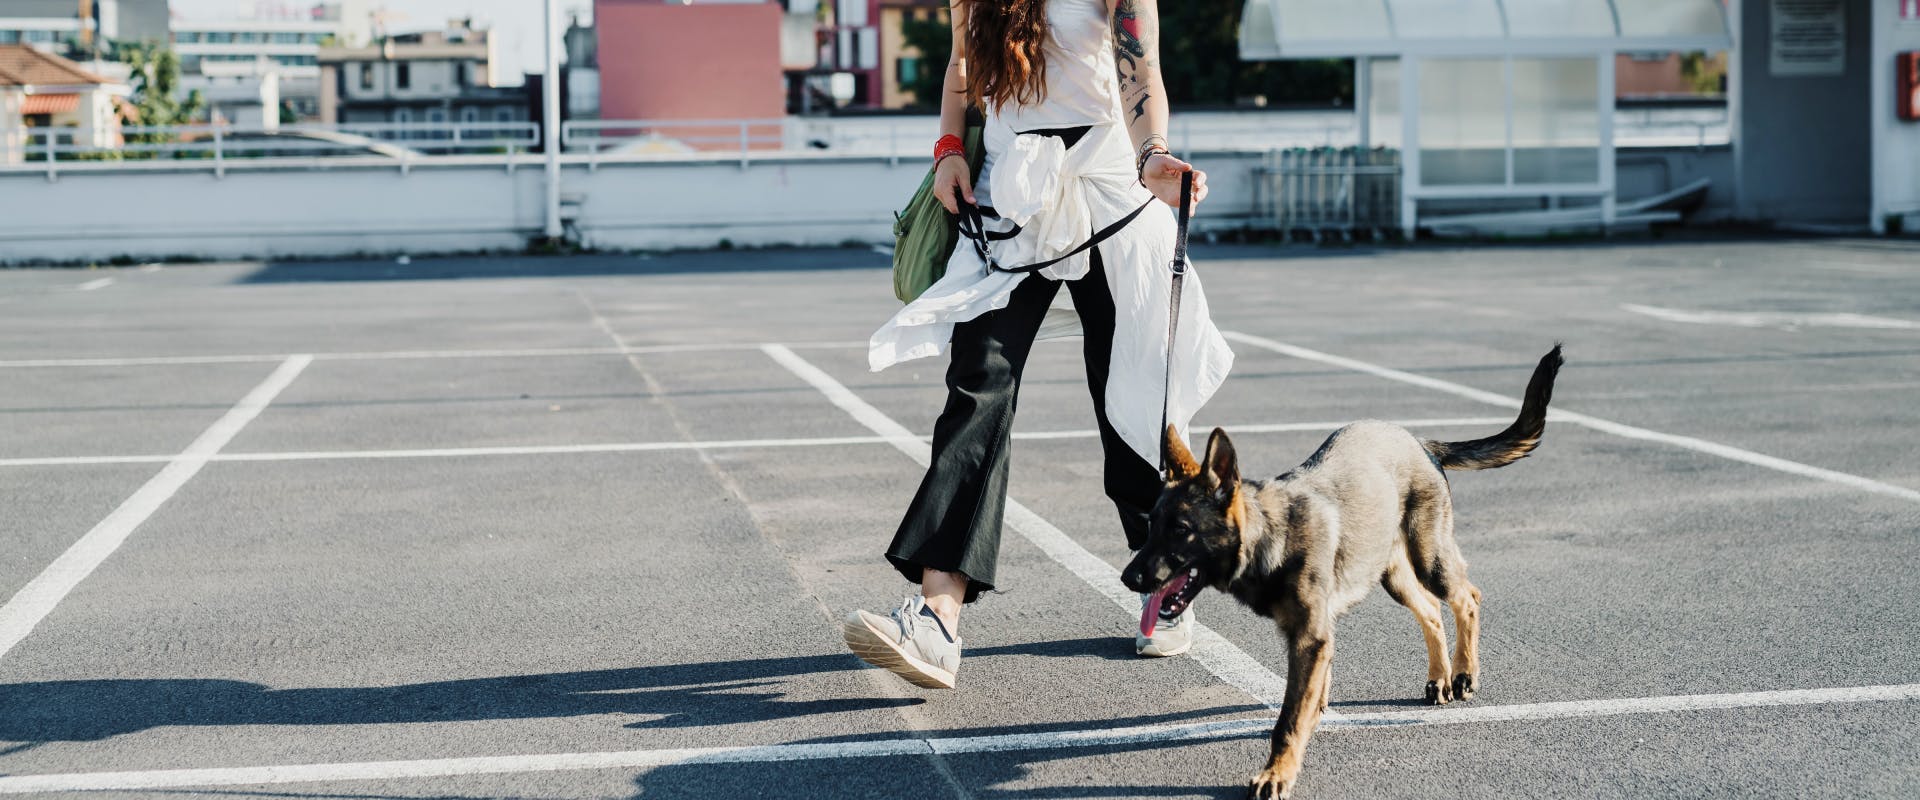 A woman walks a dog in Milan.